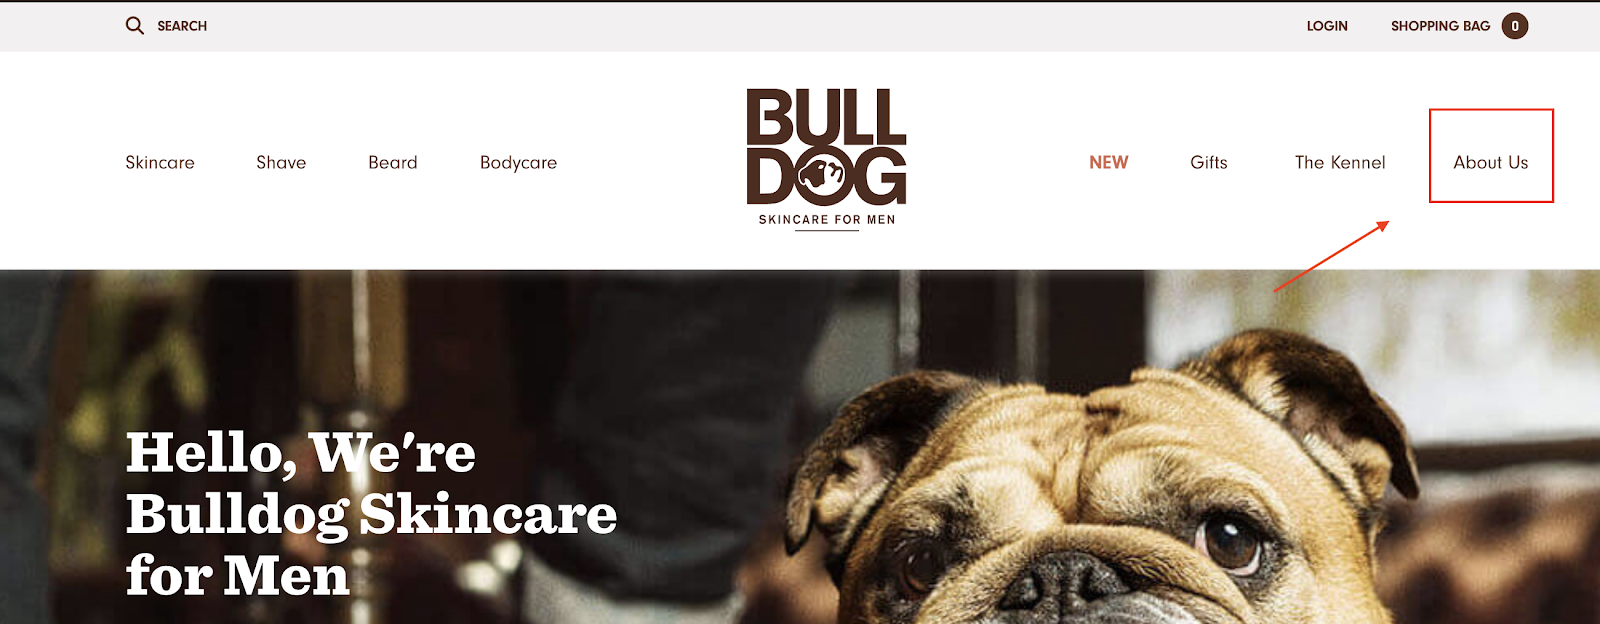 Bulldog Skincare about page